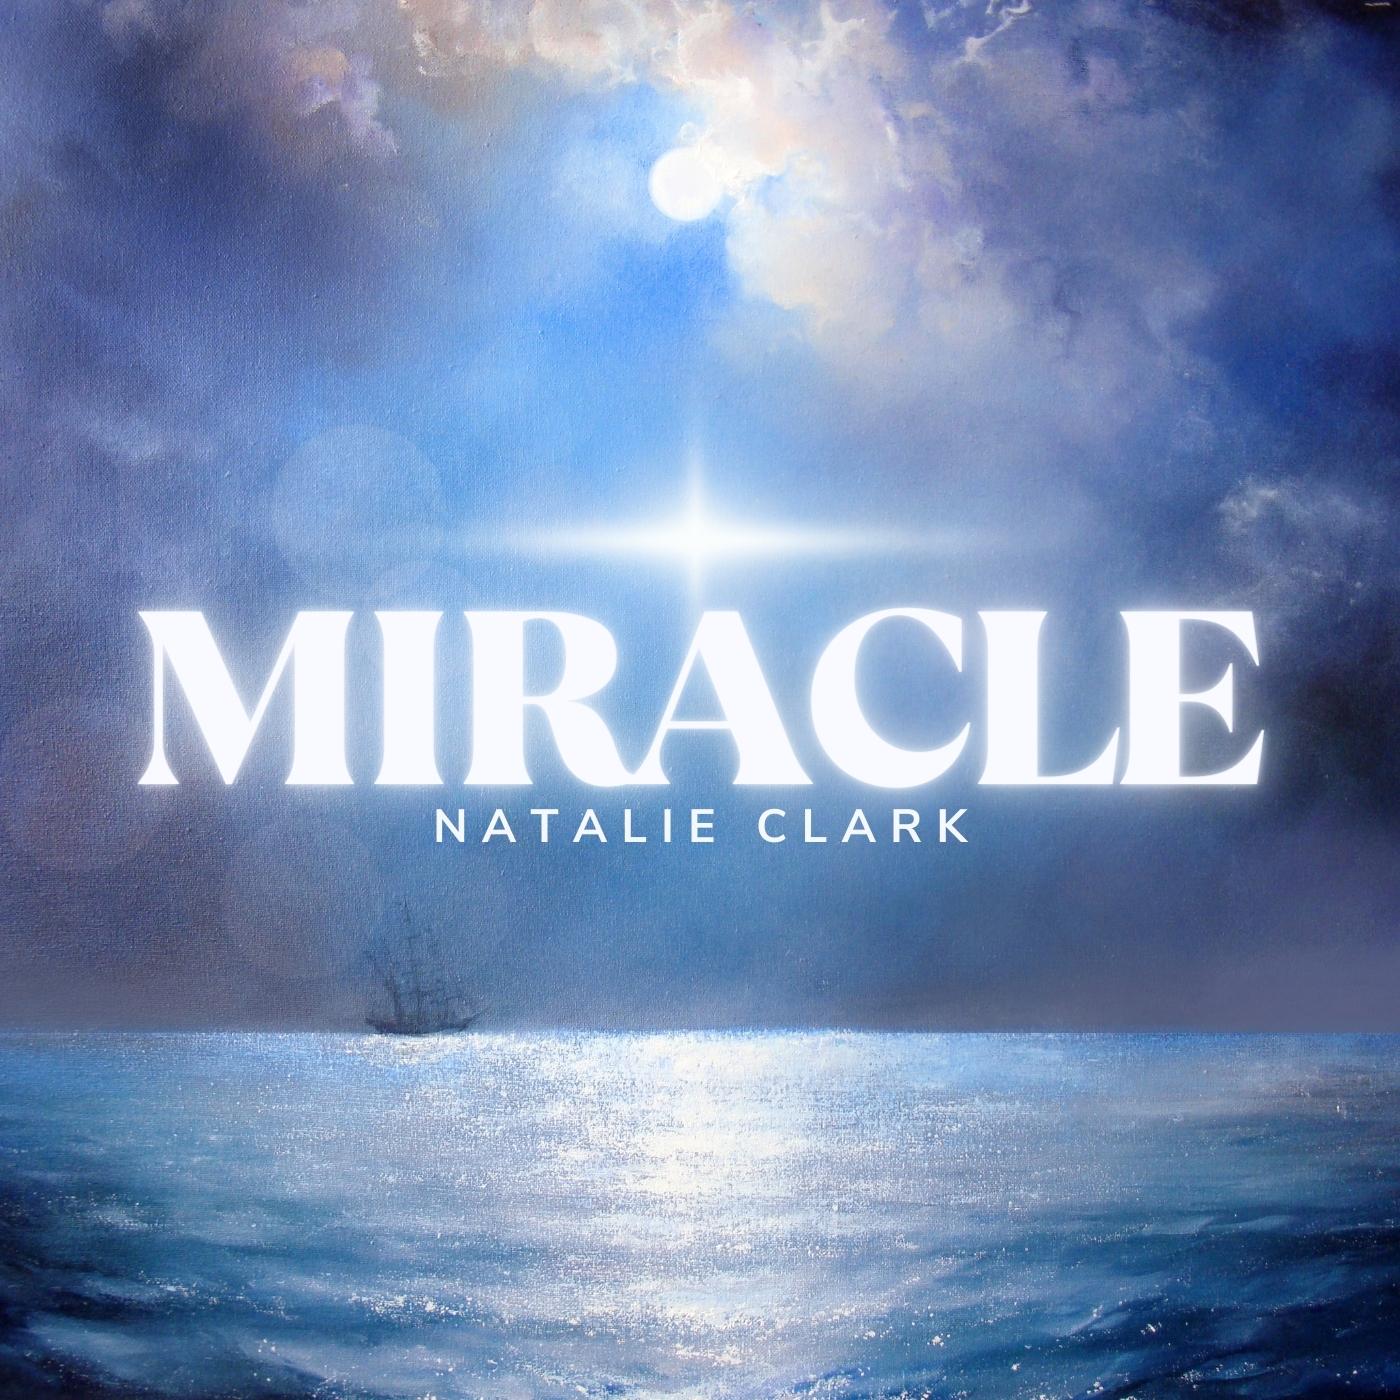 Natalie Clark – “MIRACLE”